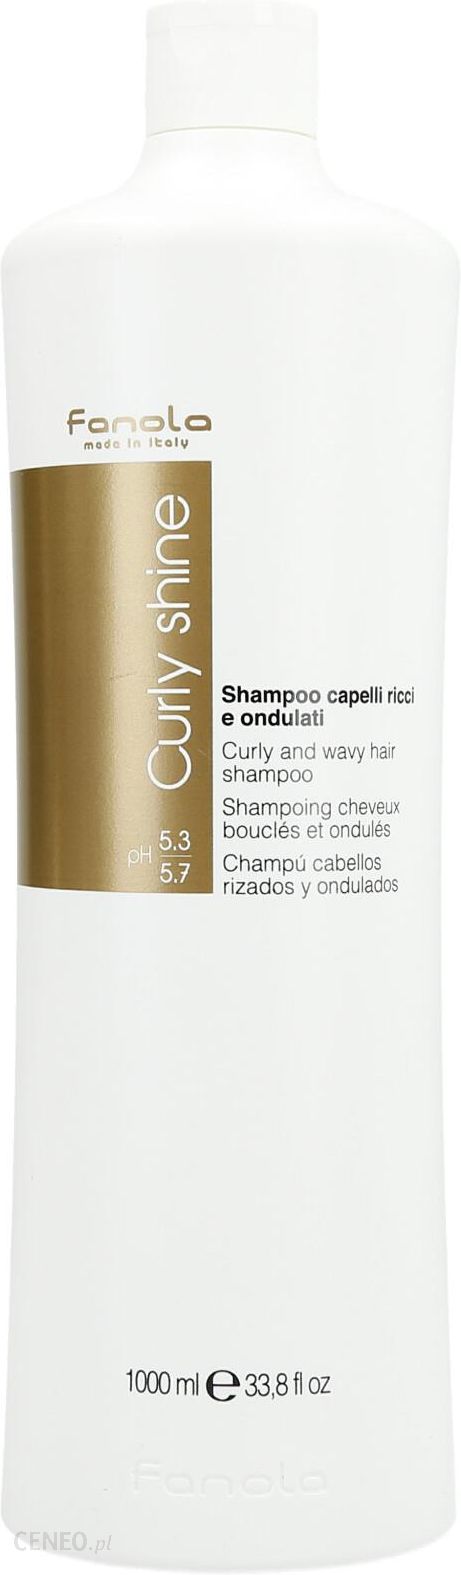 fanola curly shine szampon 350 ml